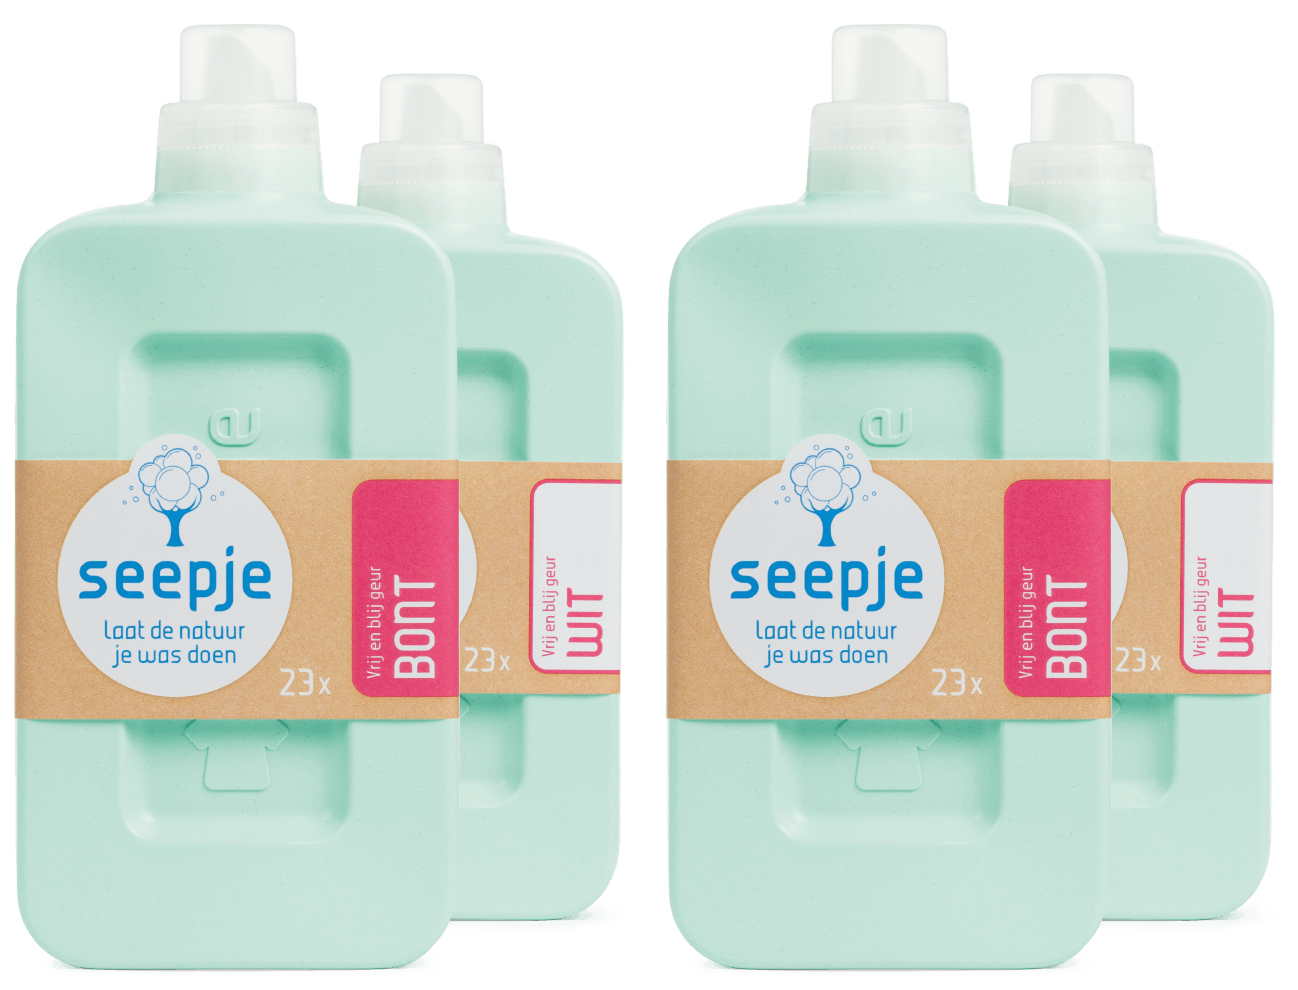 Seepje Free and happy bundle